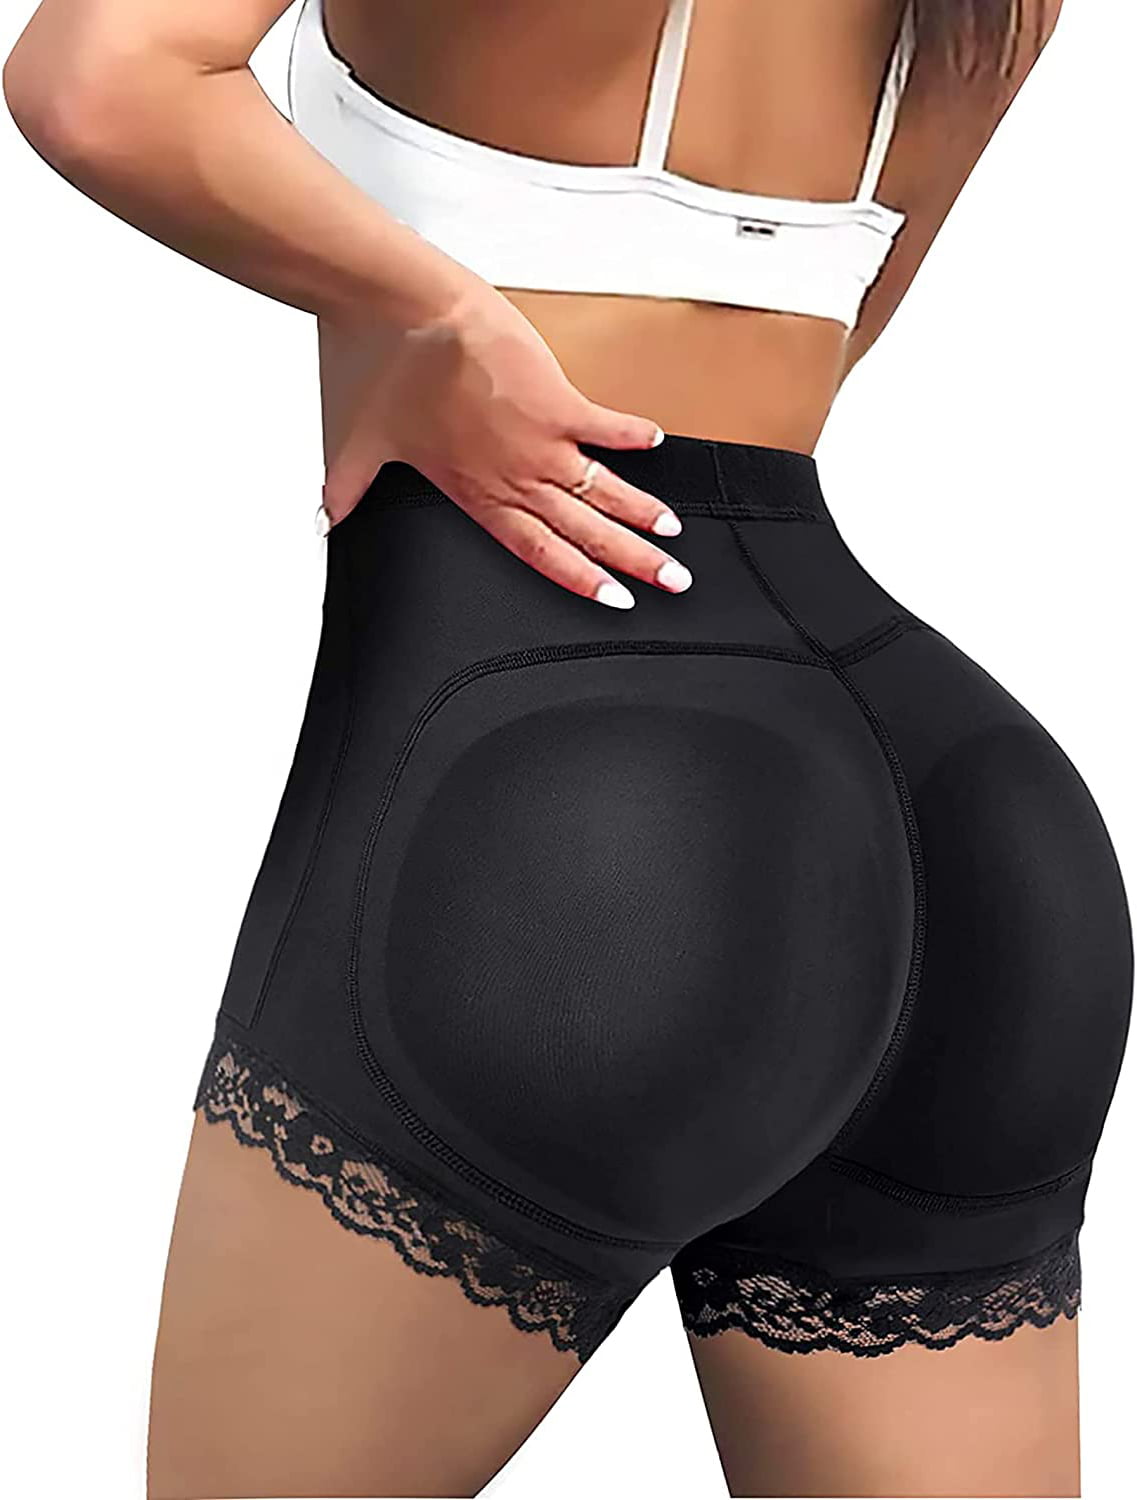 Bafully Women Butt Lifter Shapewear Padded Lace Panties Seamless Hip Enhancer Body Shaper Tummy Control Boyshort Underwear 